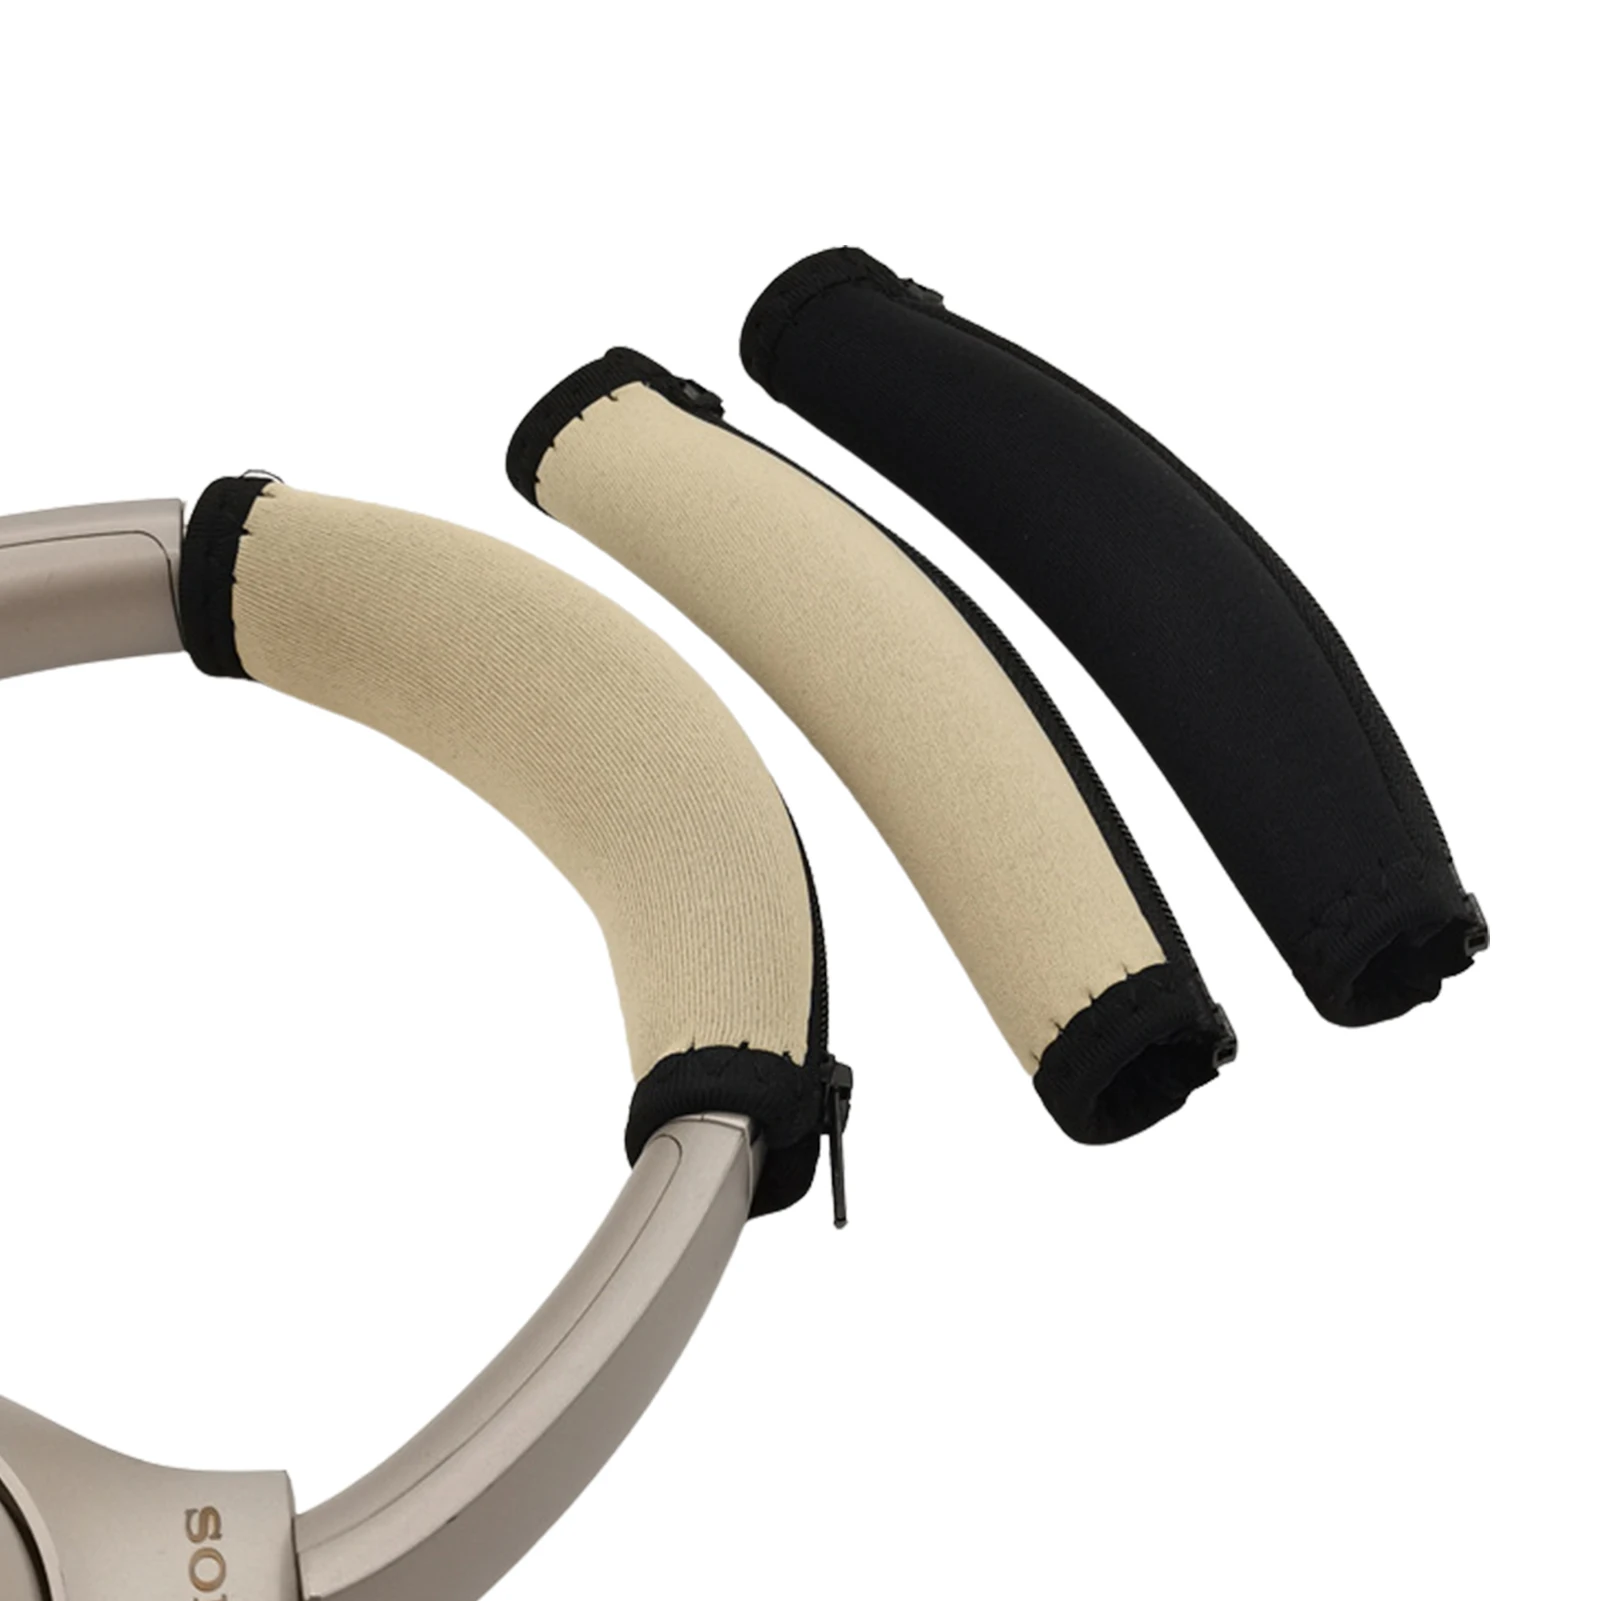 Headphone Headband ForSONY 1000XM2 1000XM3 M4 Headphone Head Beam Pad Headband Protective Head Band Replace Cover Head Band